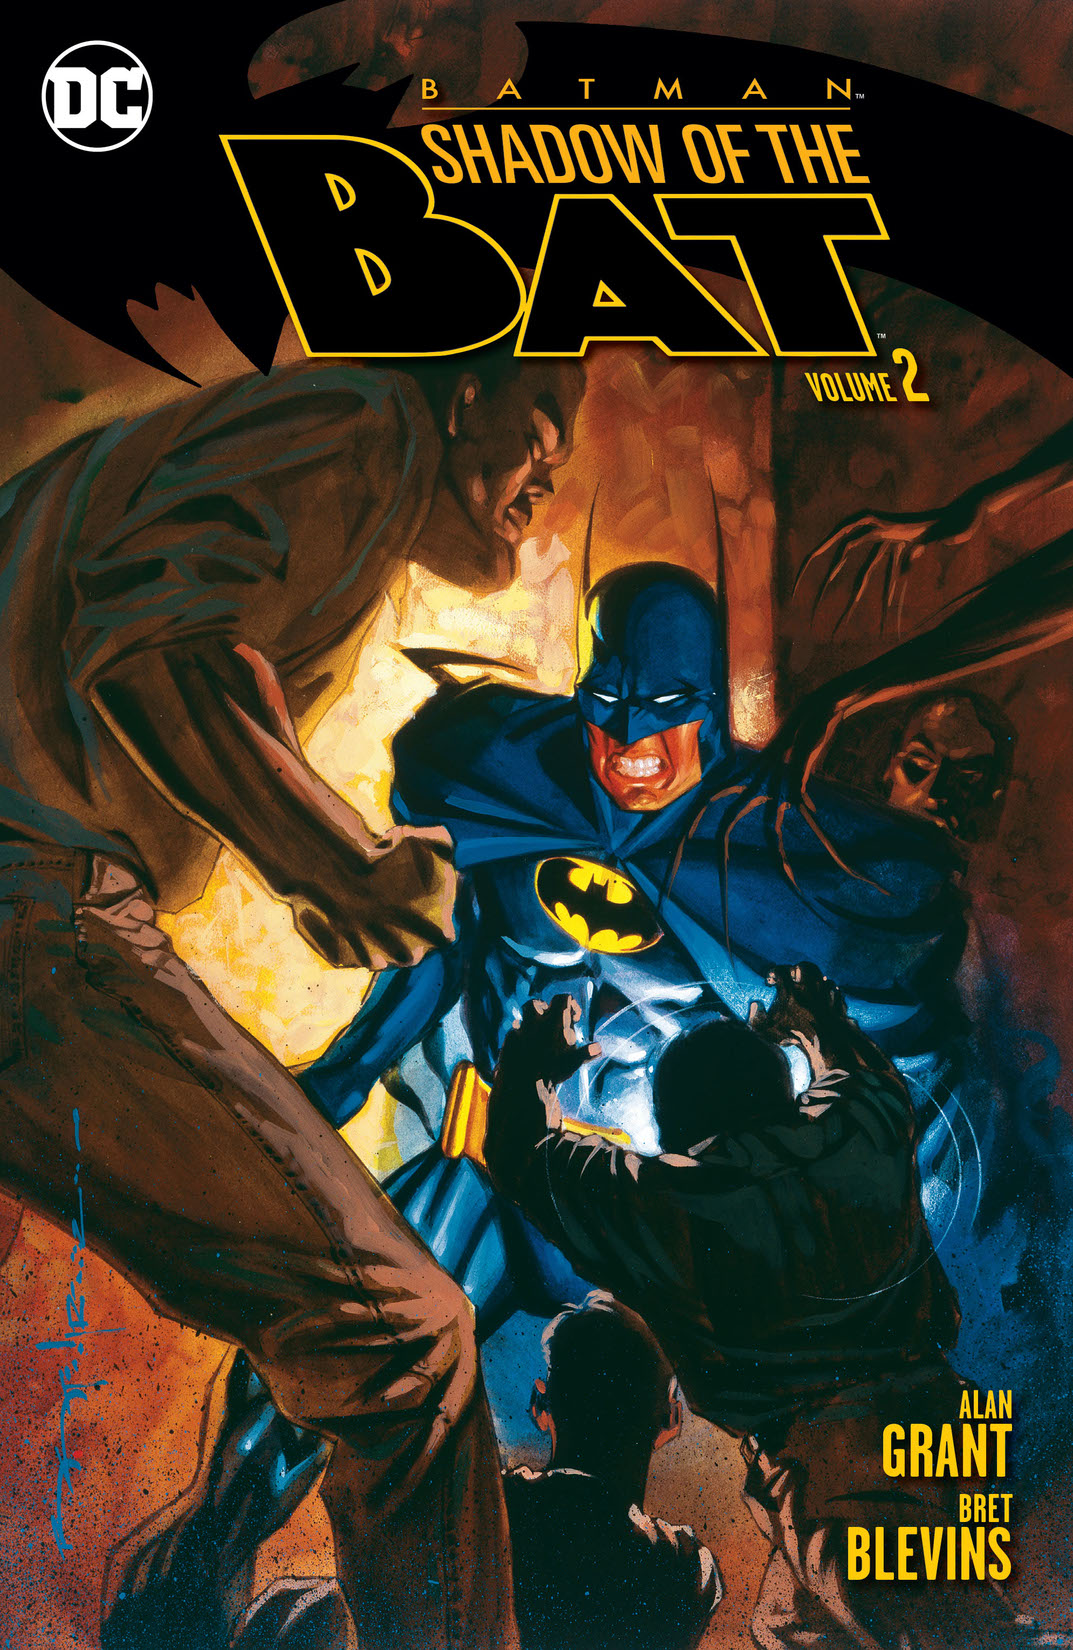 Batman: Shadow of the Bat Vol. 2 preview images